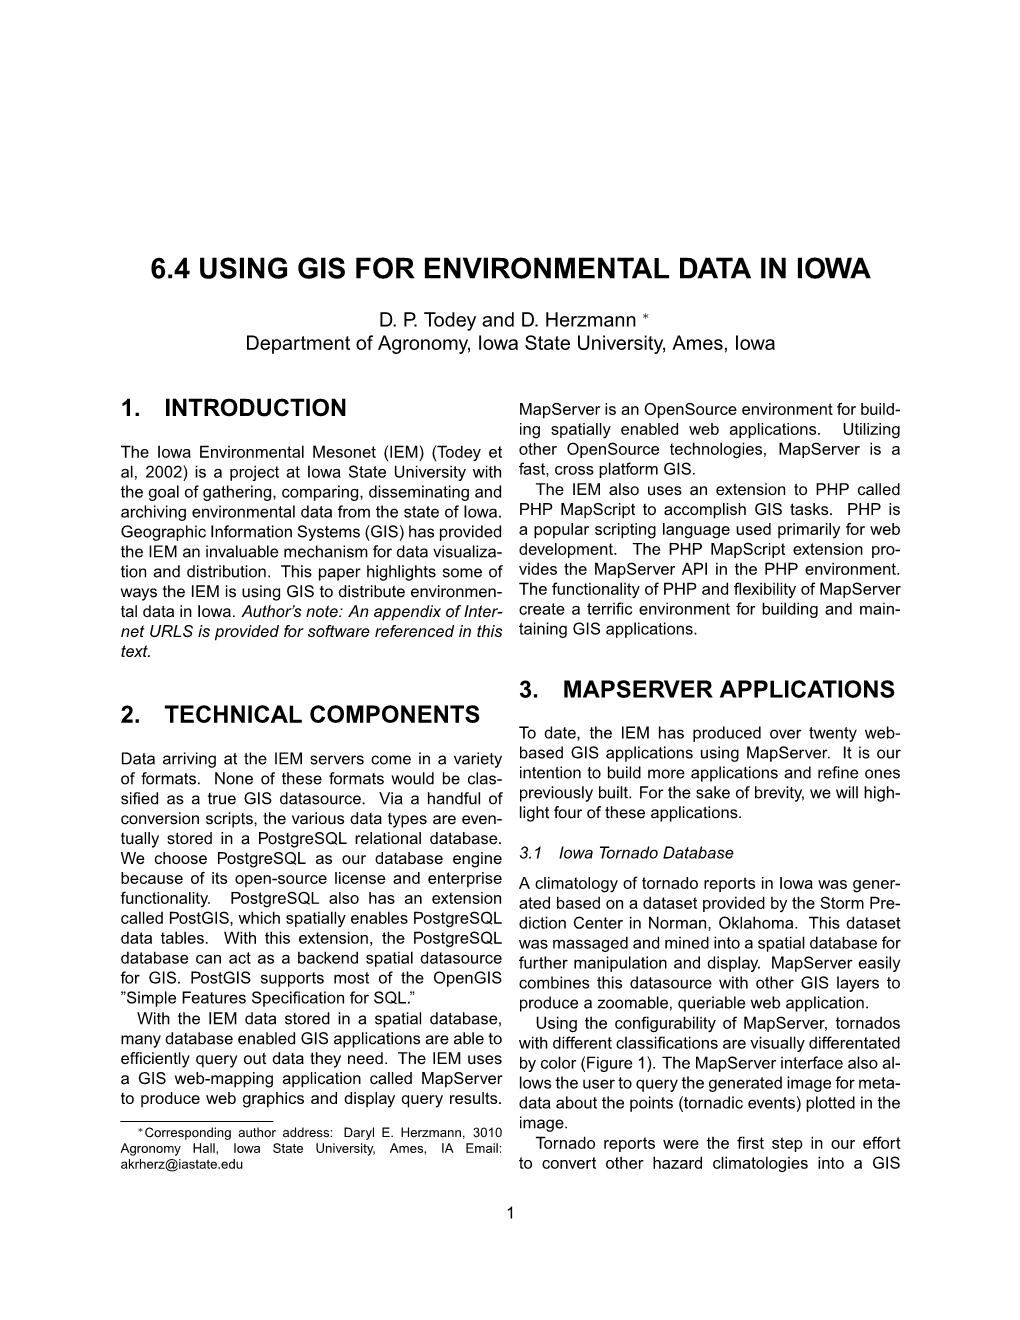 6.4 Using Gis for Environmental Data in Iowa